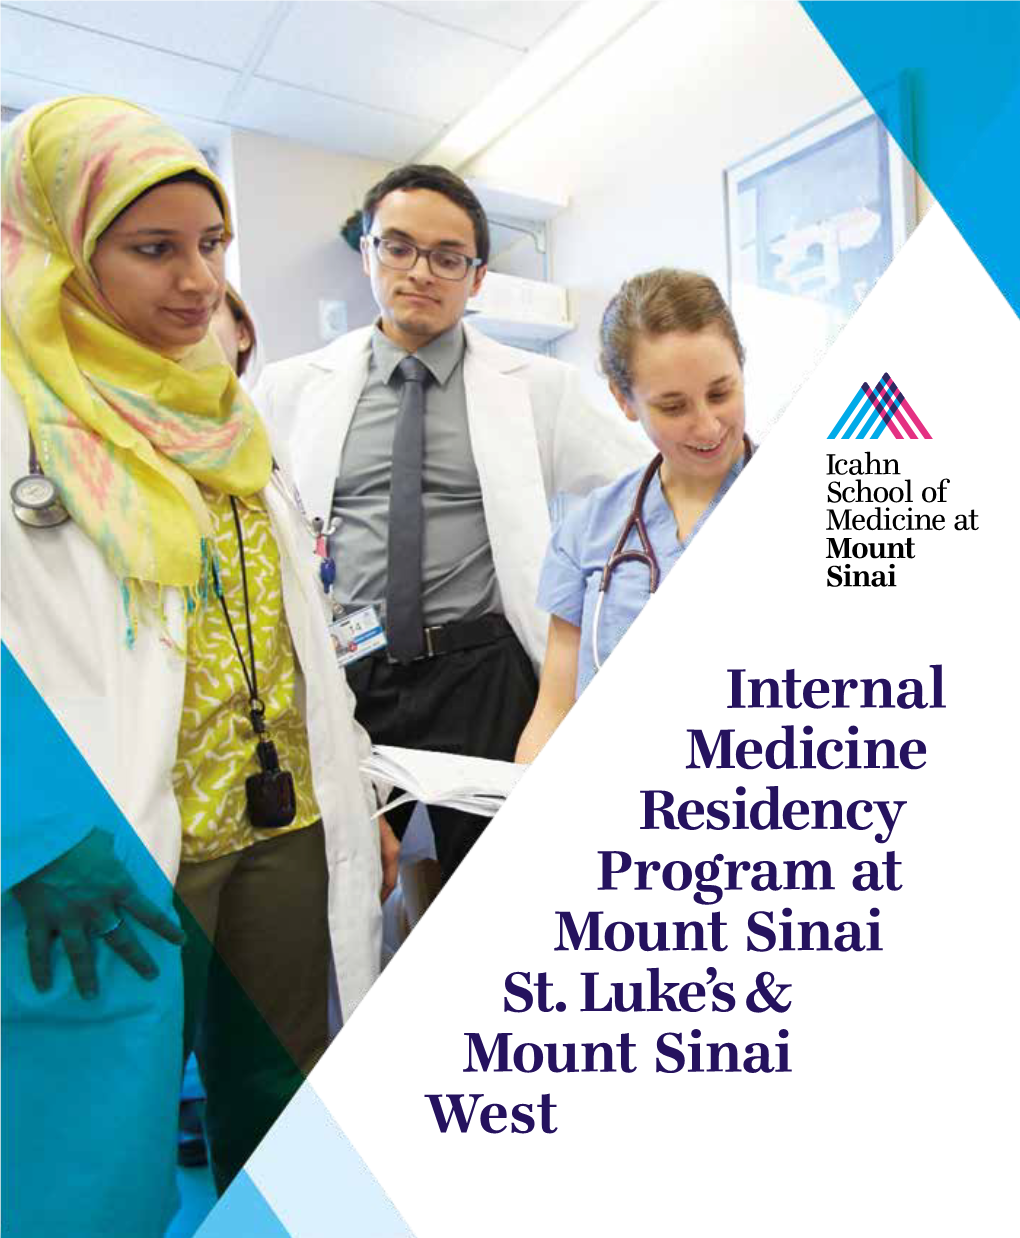 Internal Medicine Residency Program at Mount Sinai St. Luke's & Mount